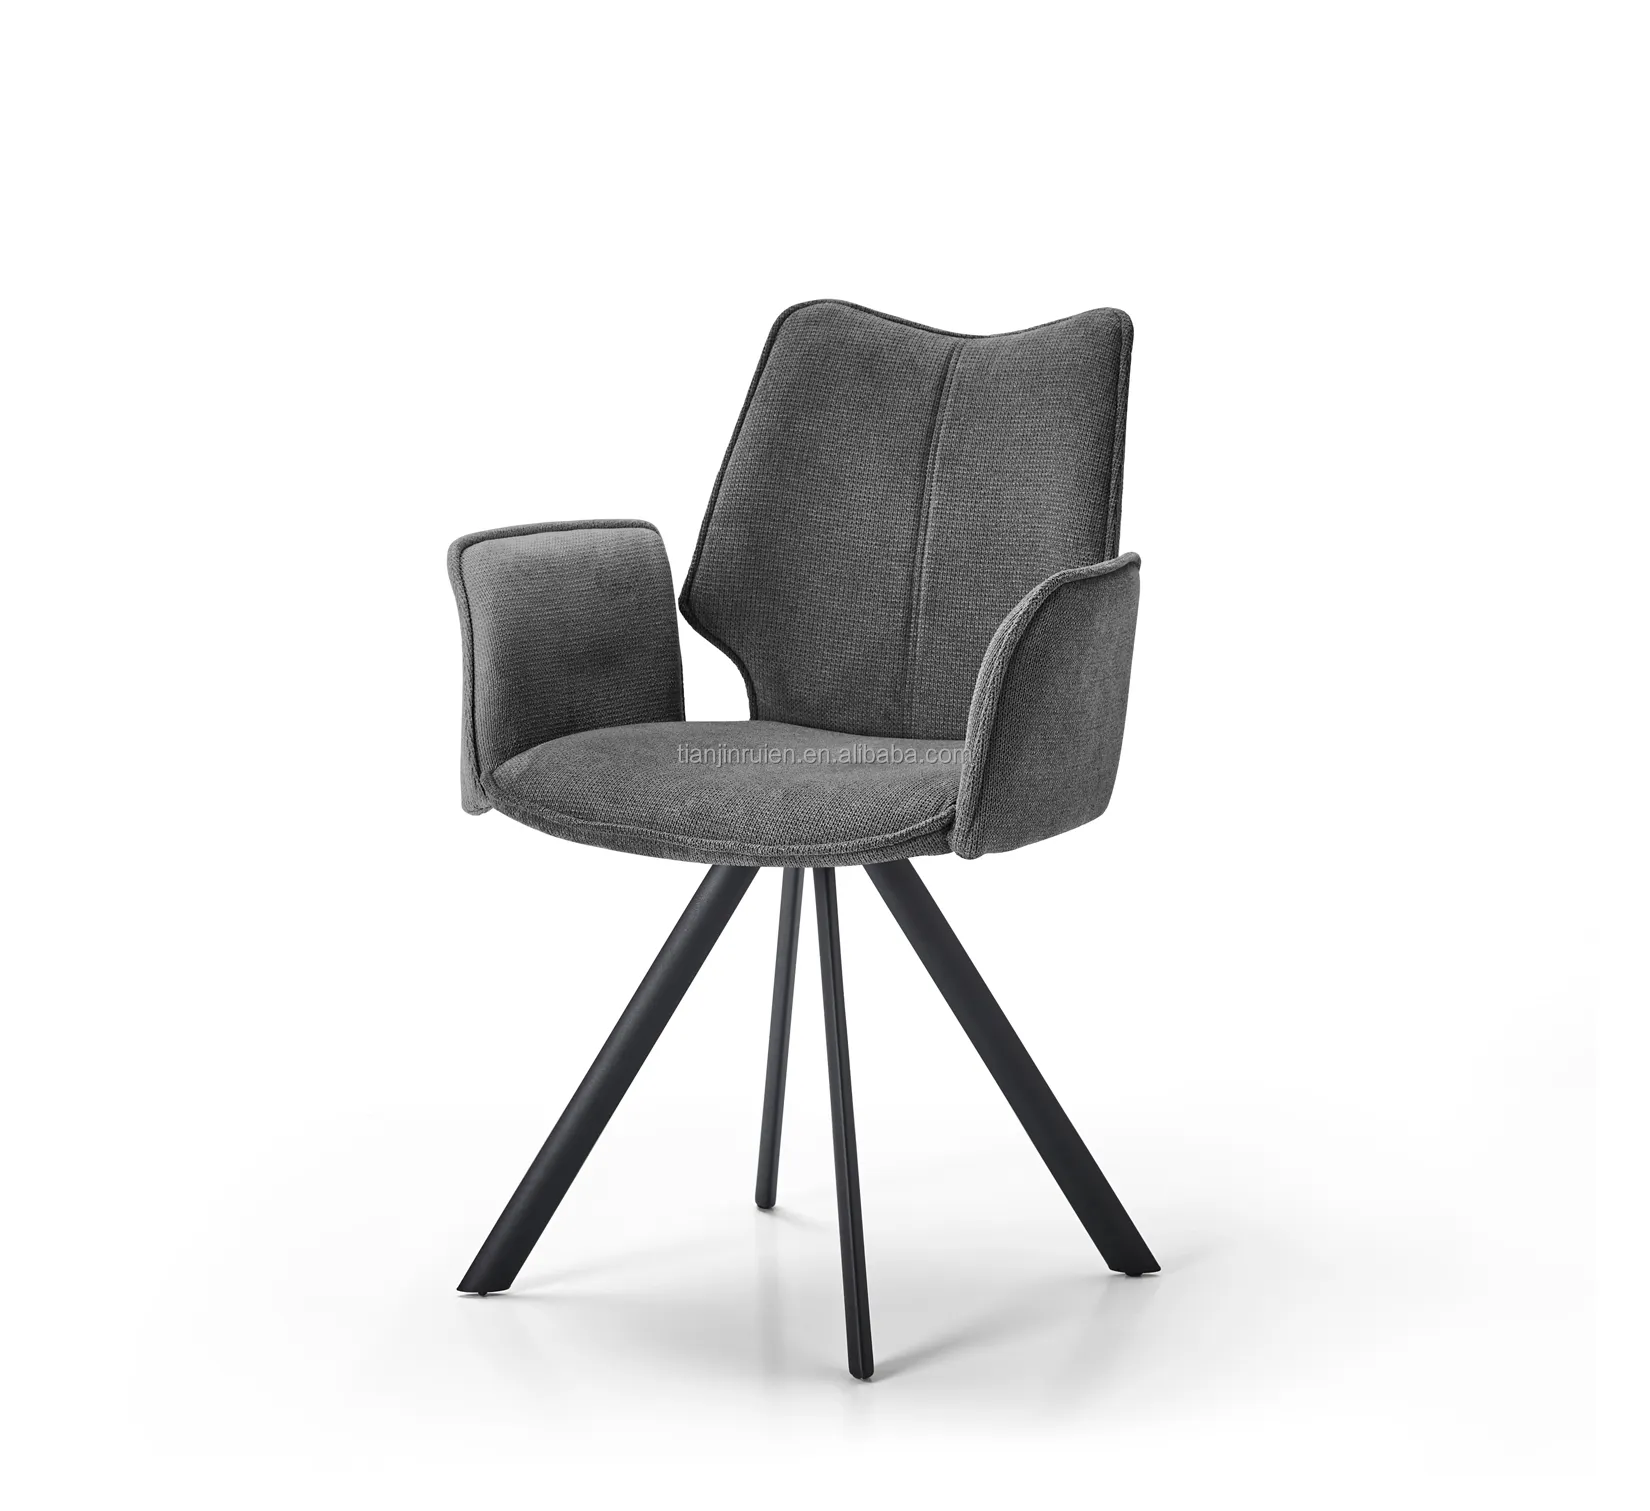 Best seller elegant dark grey fabric kitchen dining chair with armrest